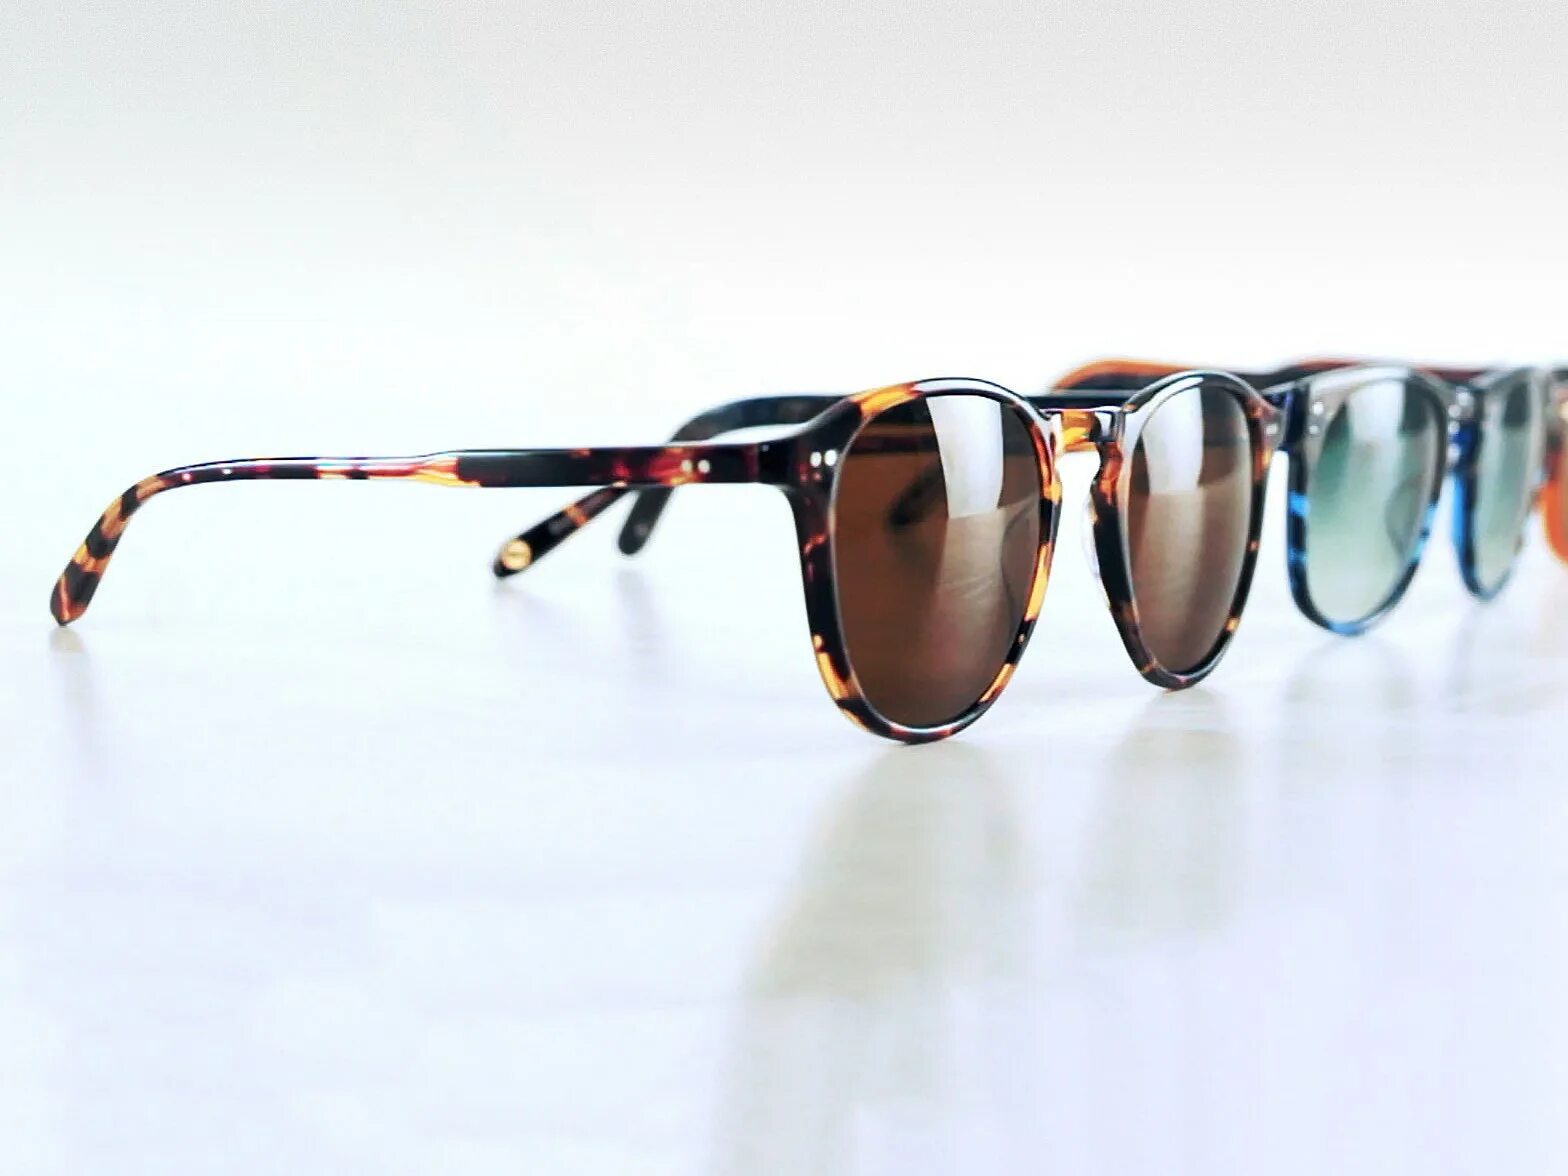 Your sunglasses. Очки. Солнечные очки. Реклама солнцезащитных очков. Солнцезащитные очки реклама.